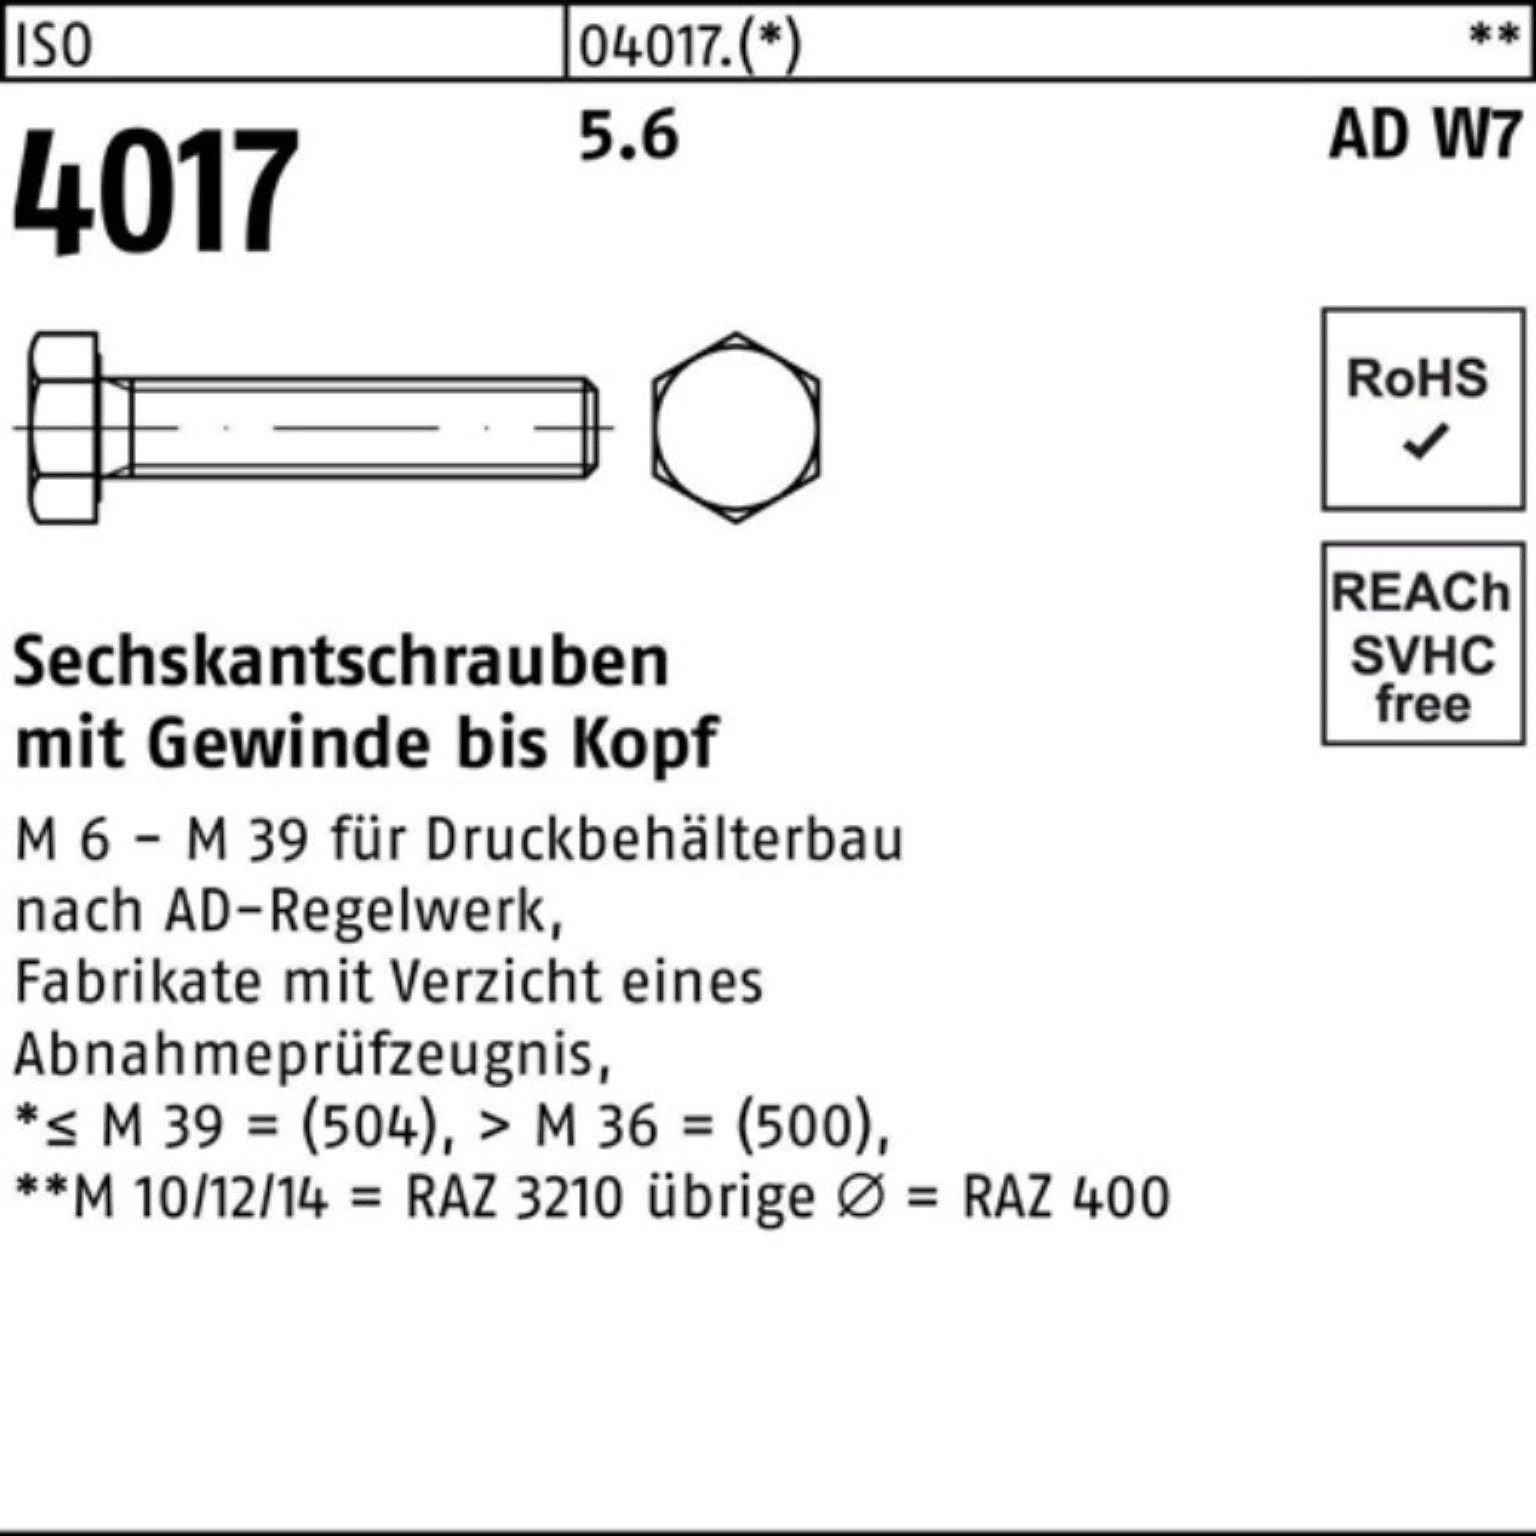 M10x 200er Stück ISO 5.6 Pack 25 VG Sechskantschraube Sechskantschraube 4017 W7 AD Bufab 200